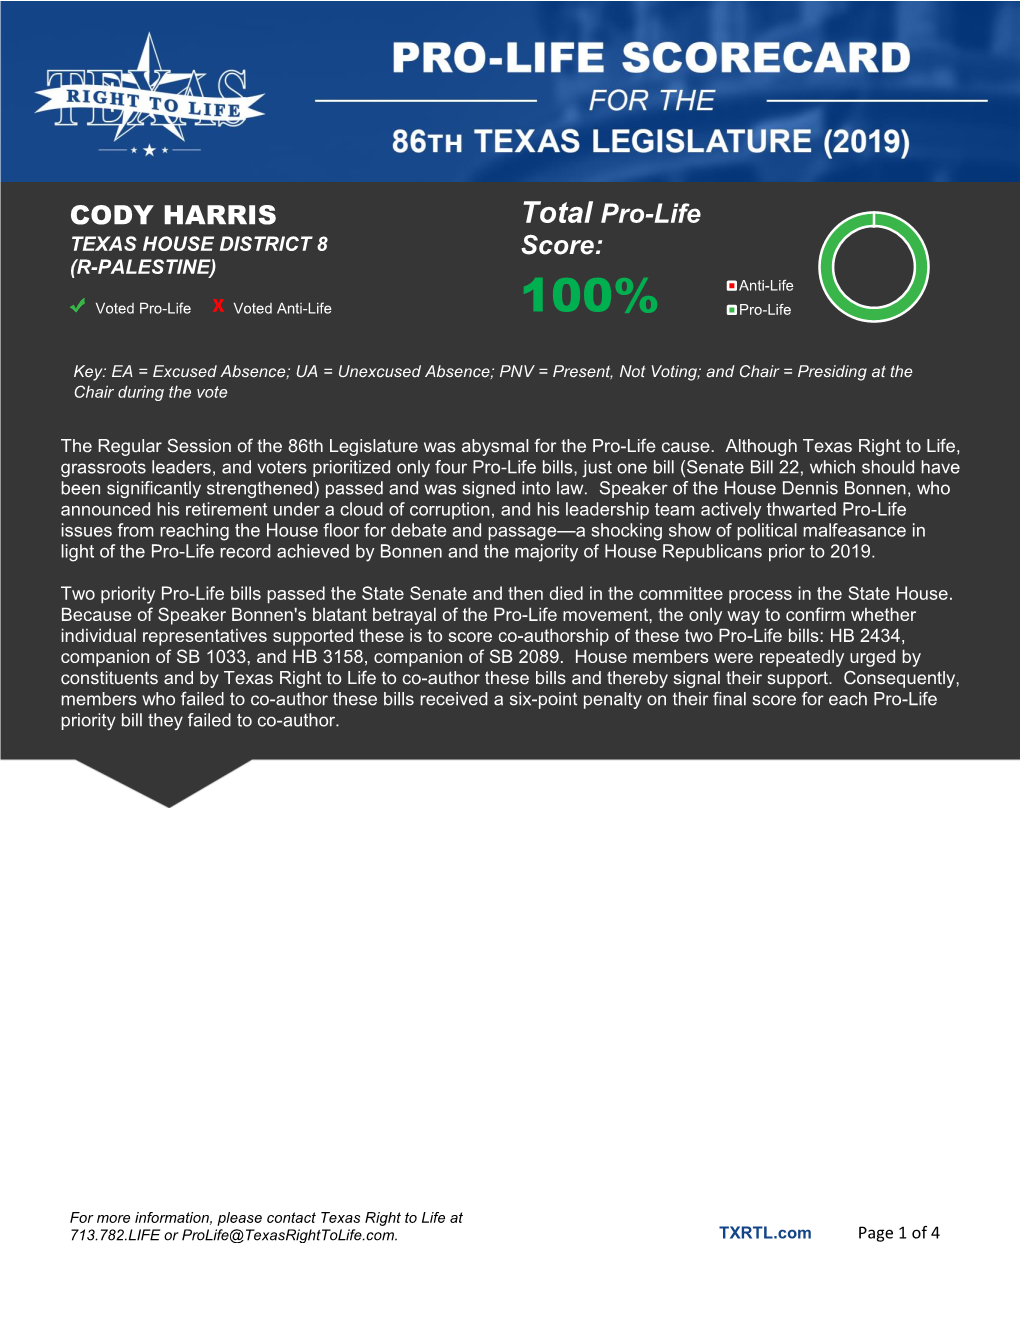 CODY HARRIS Total Pro-Life Score